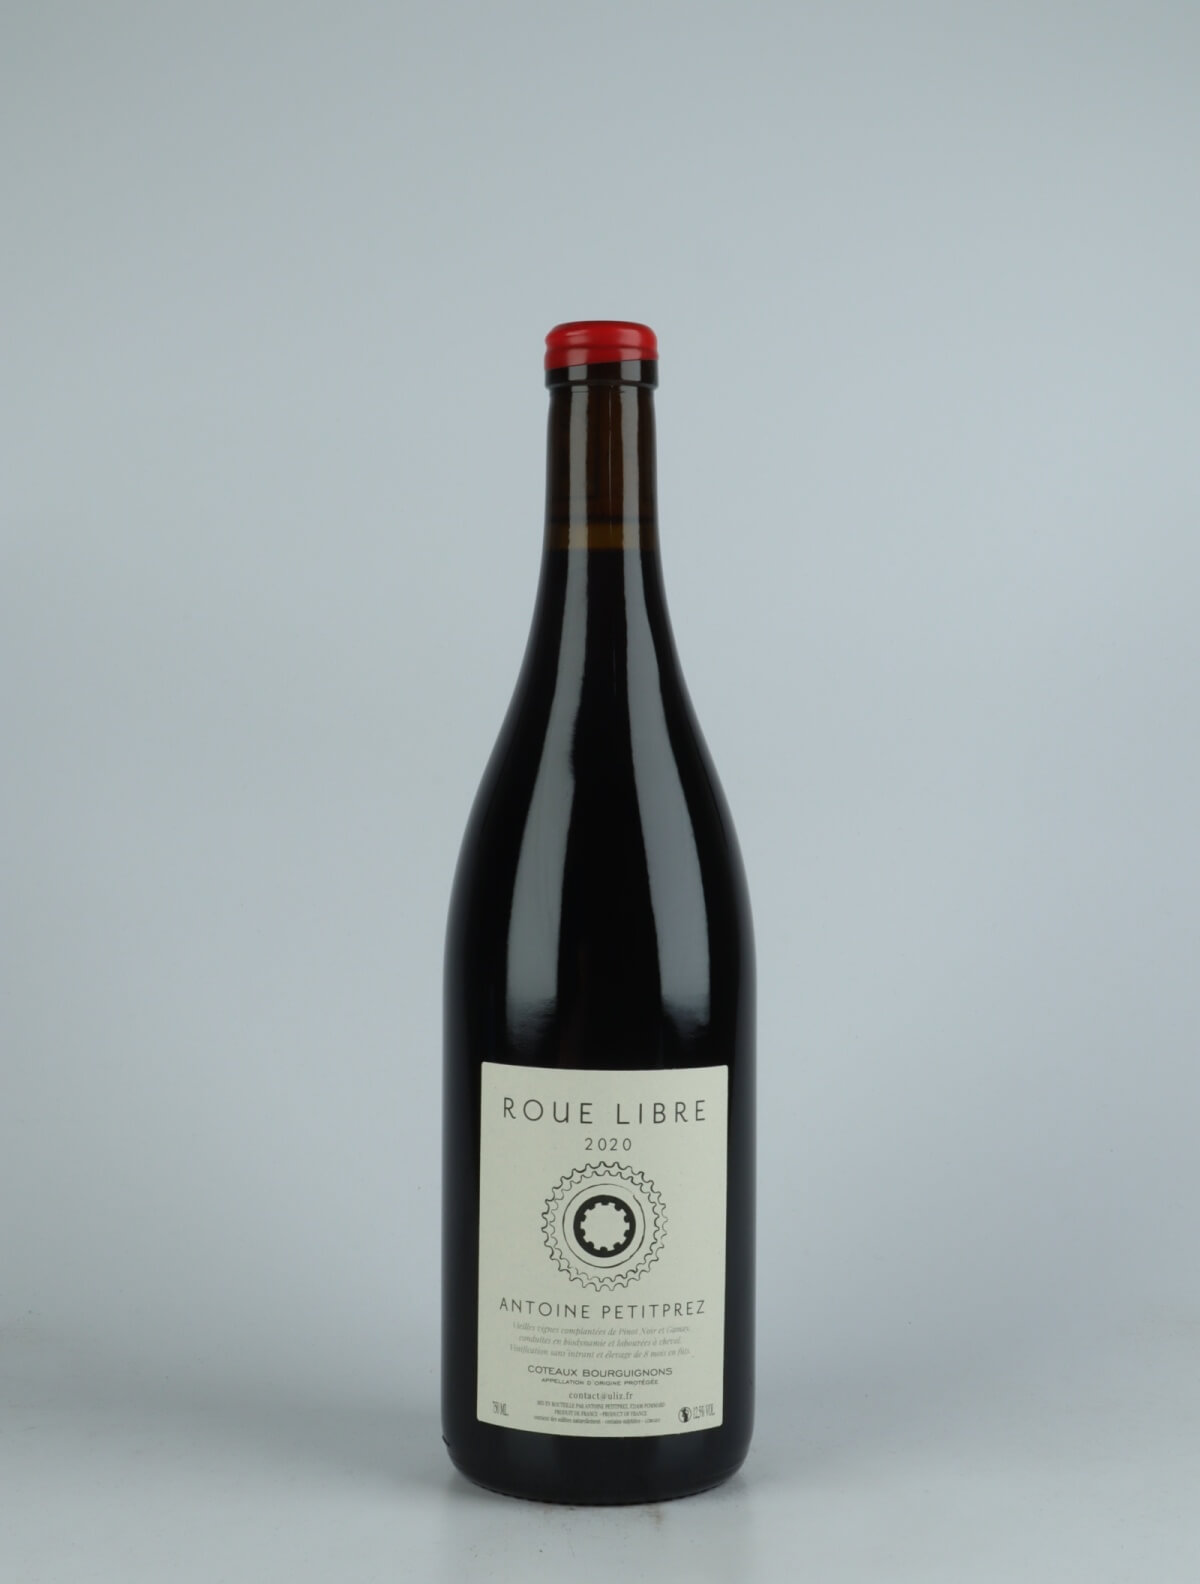 A bottle  Coteaux Bourguignons - Roue Libre Red wine from Antoine Petitprez, Burgundy in France